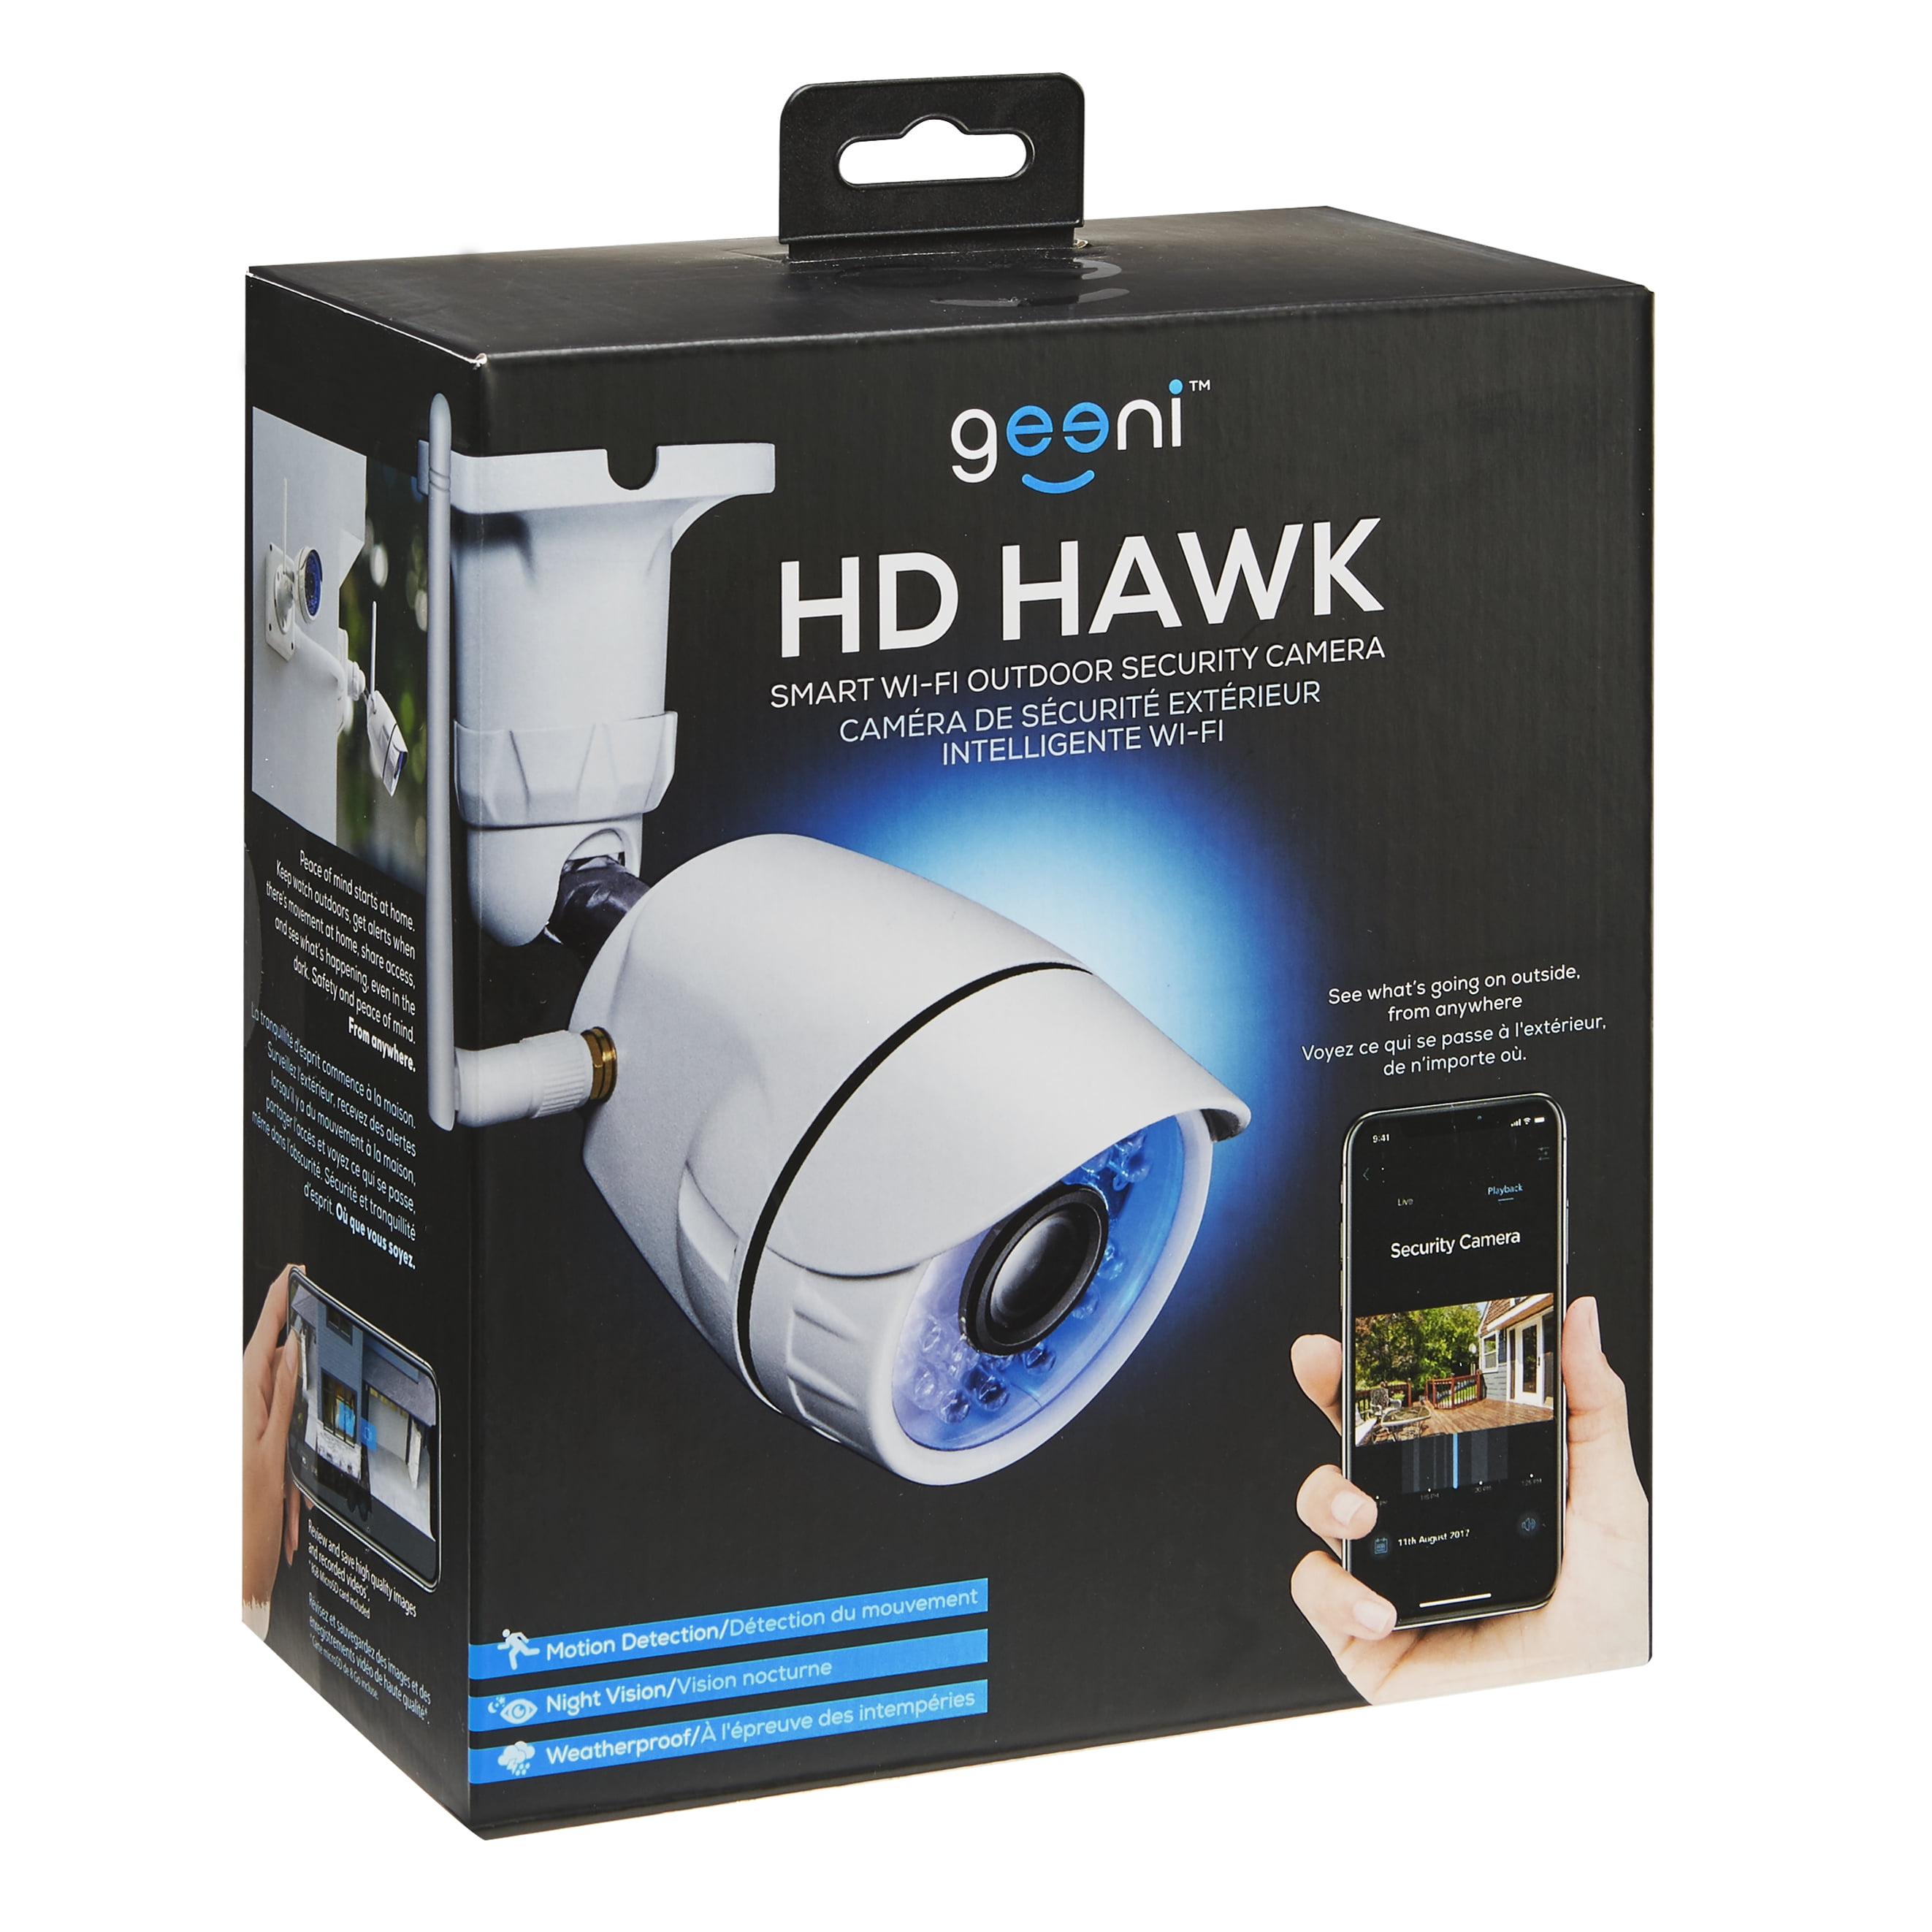 Geeni Hawk Smart Wi-Fi Outdoor Security Camera 720p 